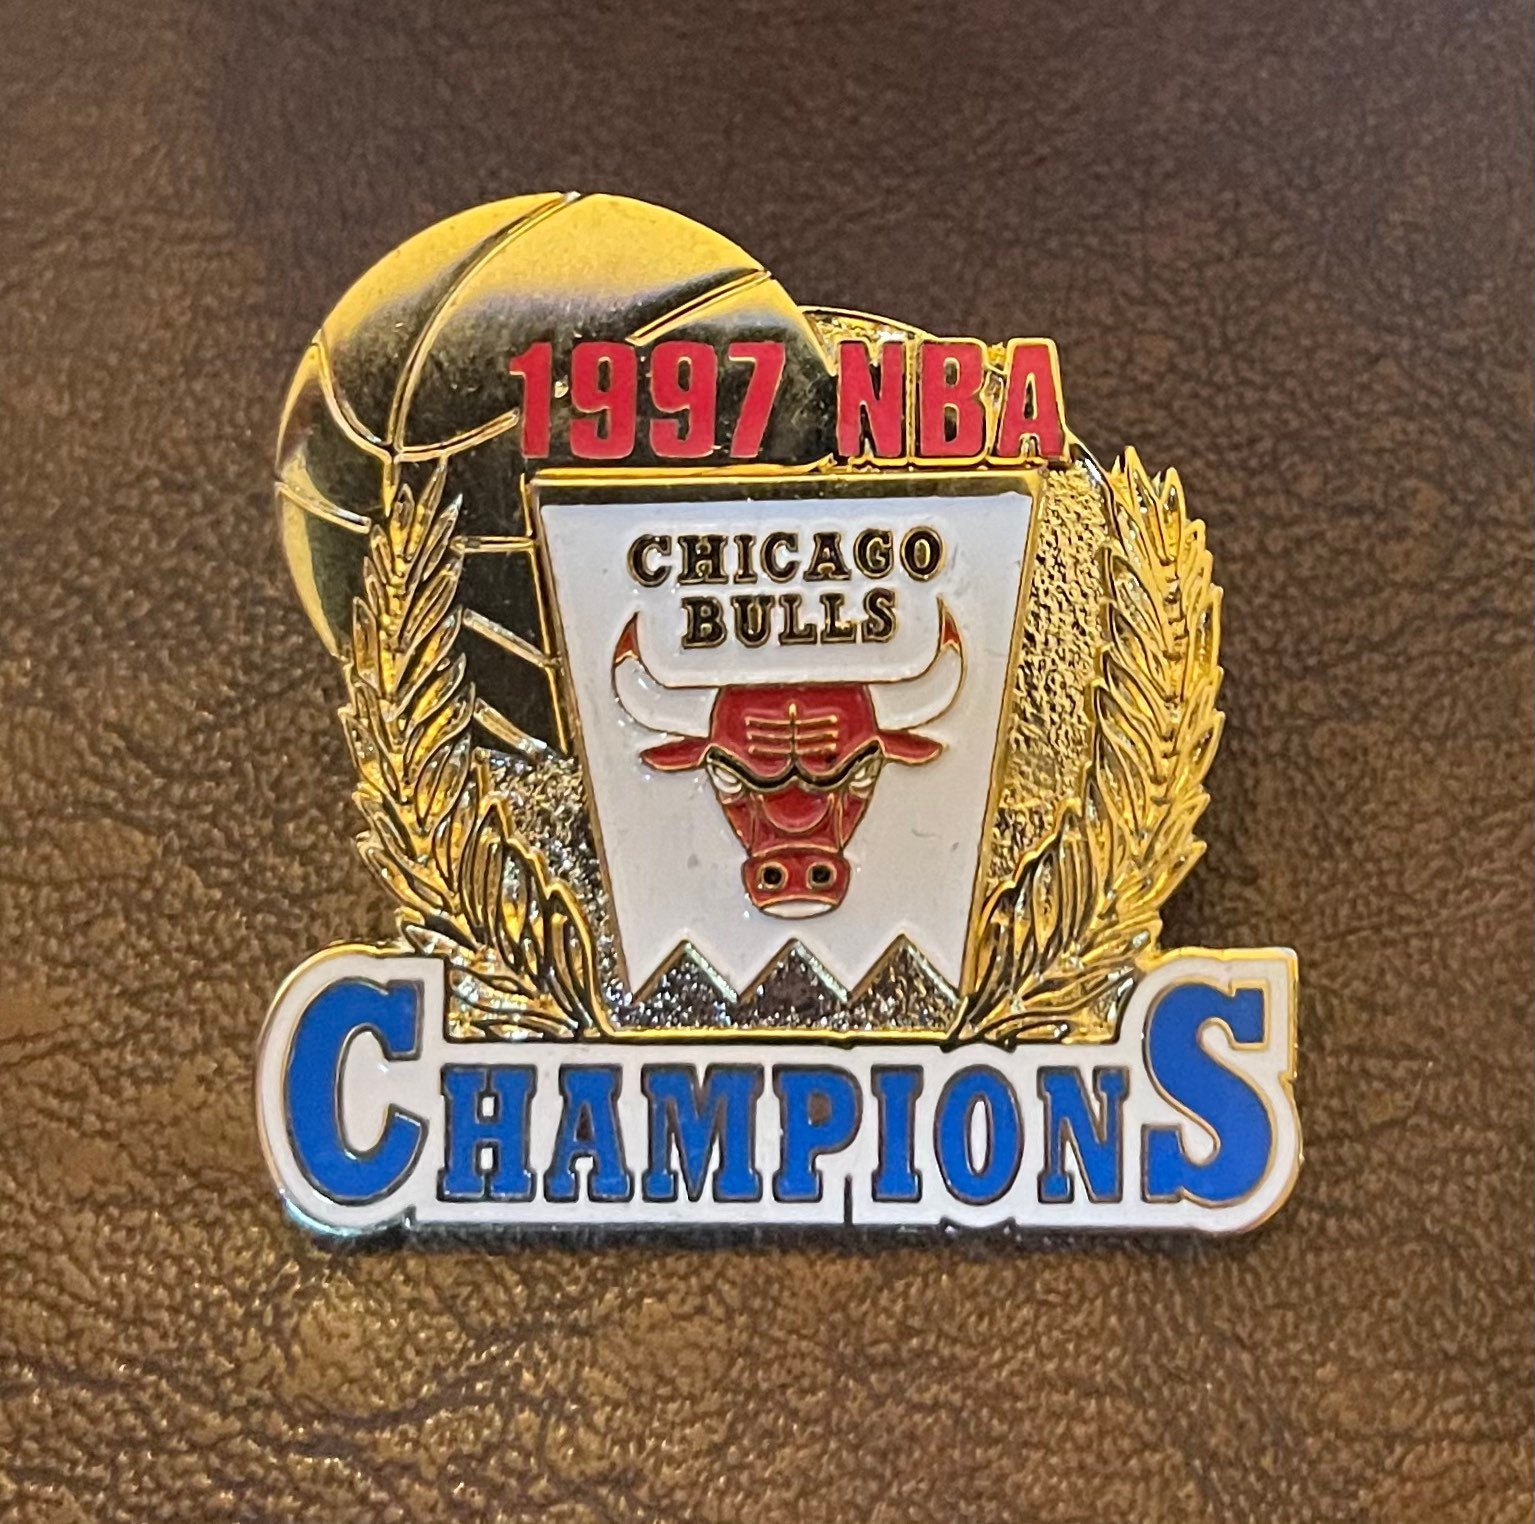 The Last Dance': The Chicago Bulls' 1997-98 season – Daily Press